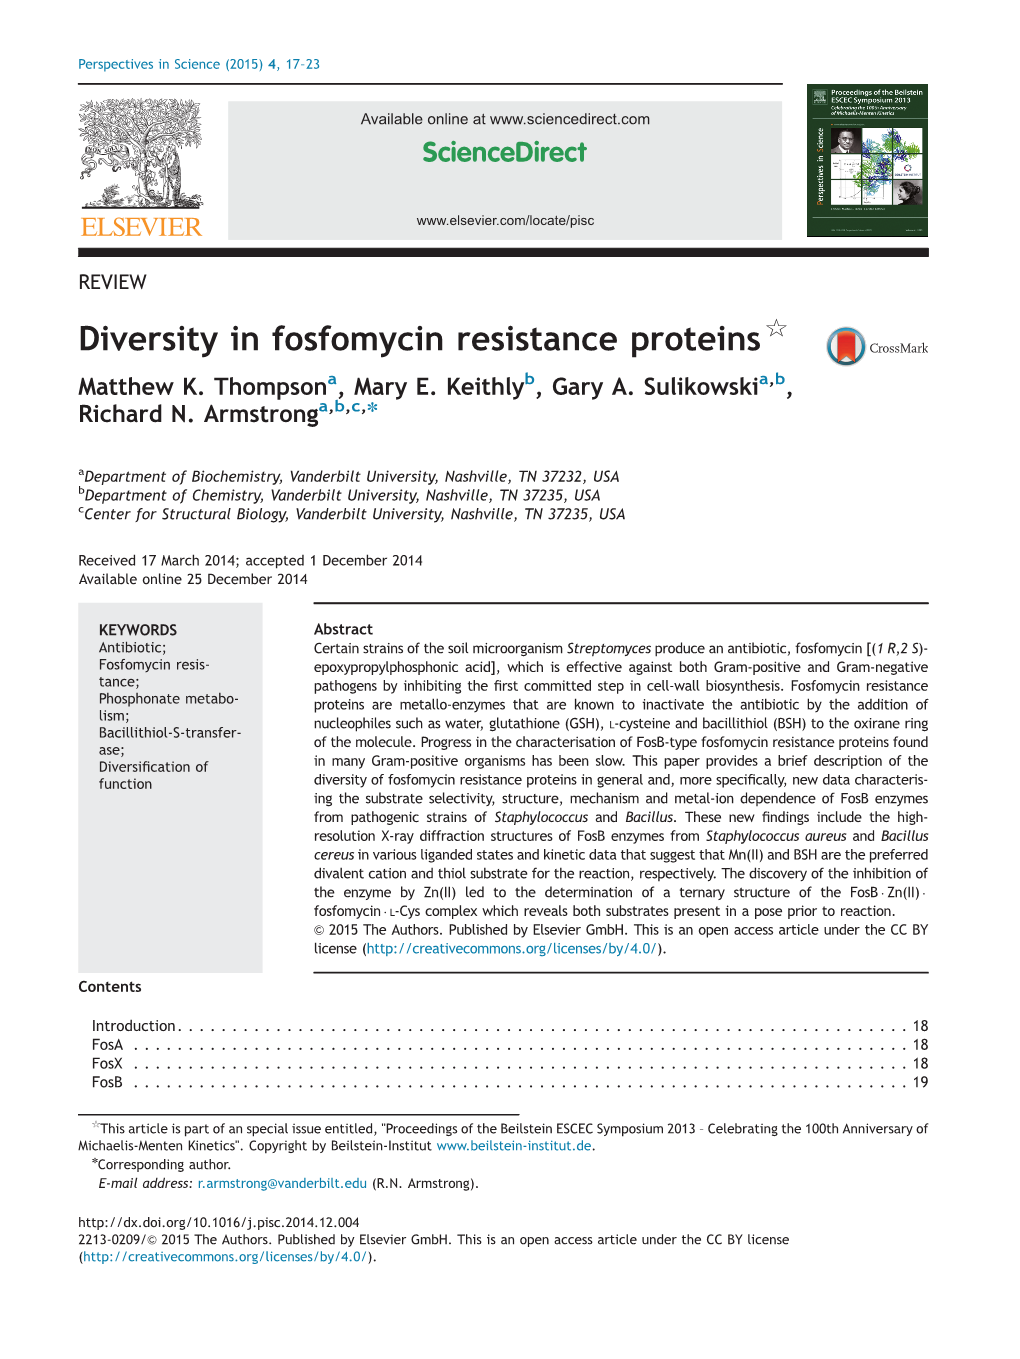 Diversity in Fosfomycin Resistance Proteins$ Matthew K